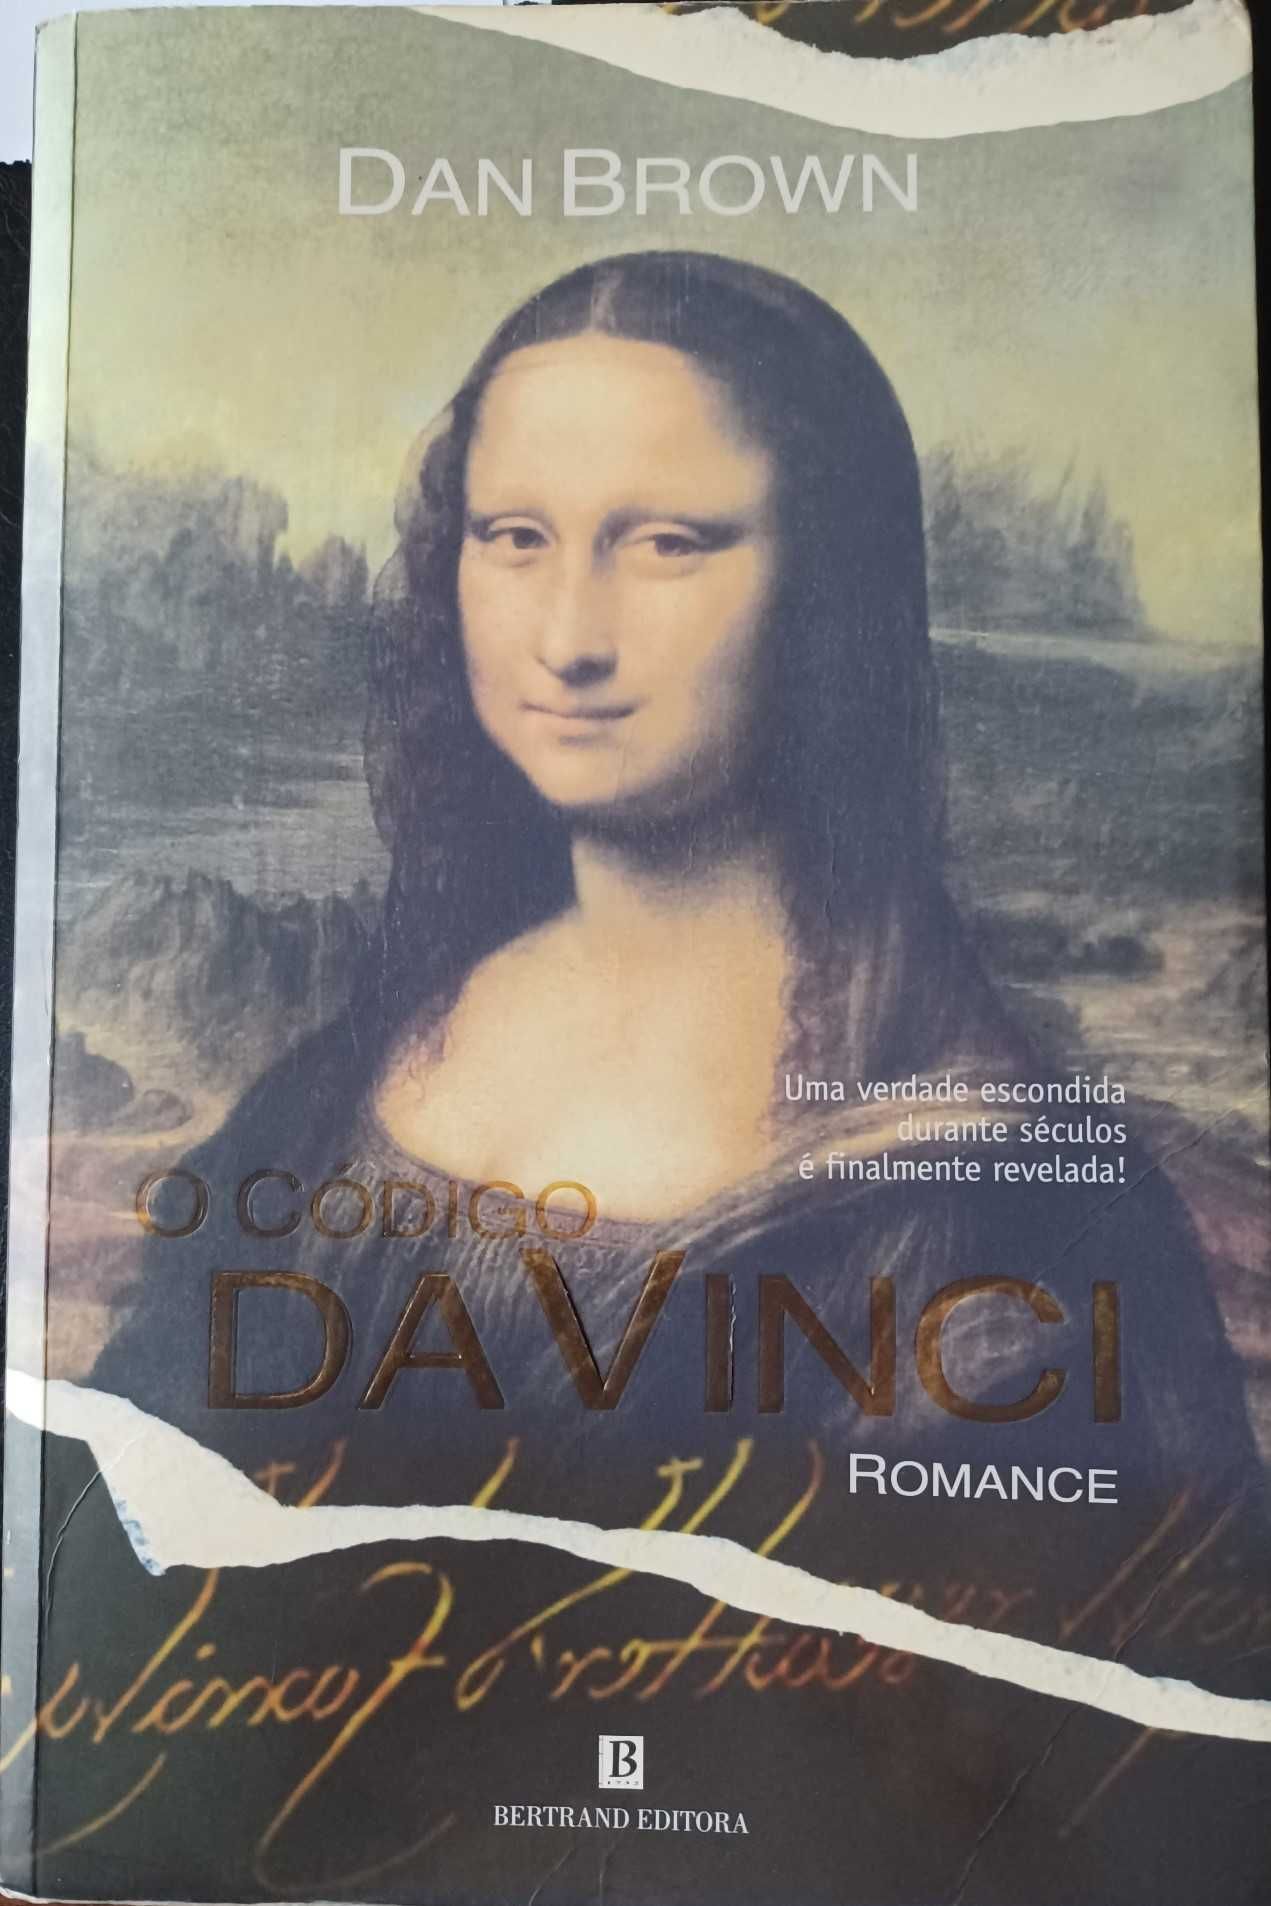 Da Vinci, de Dan Brown